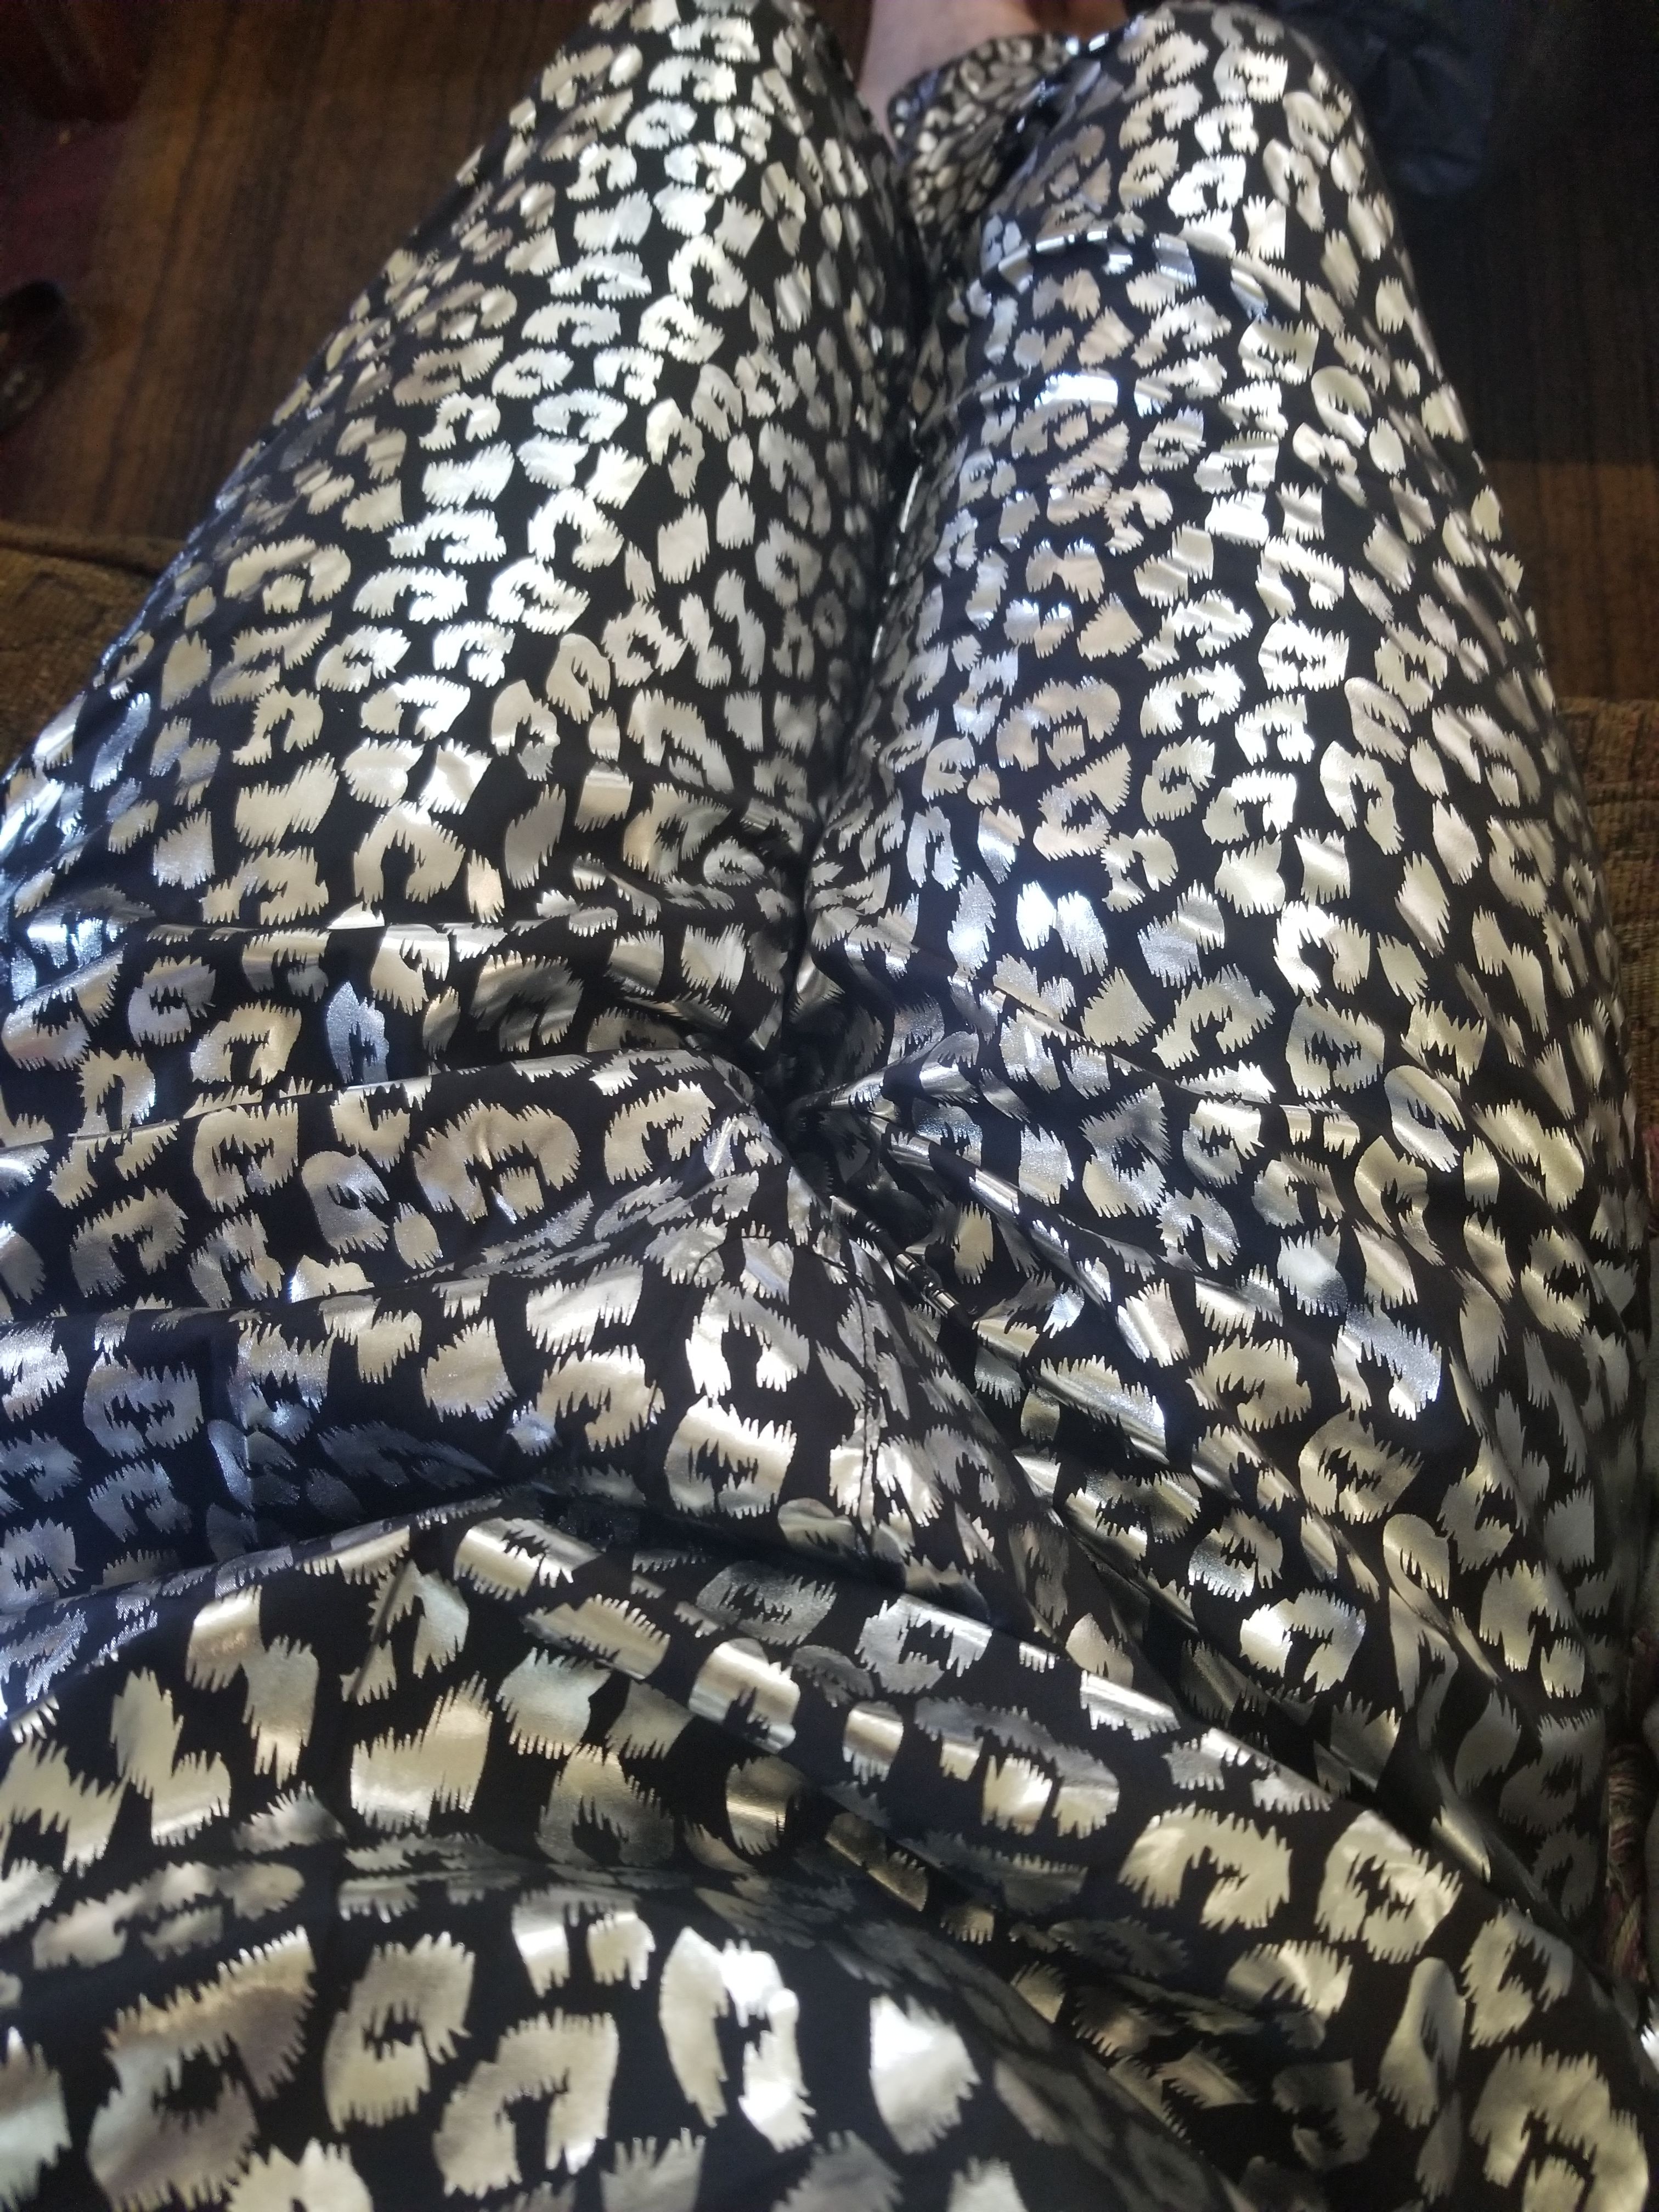 My new chrome Leopard print nylon suit